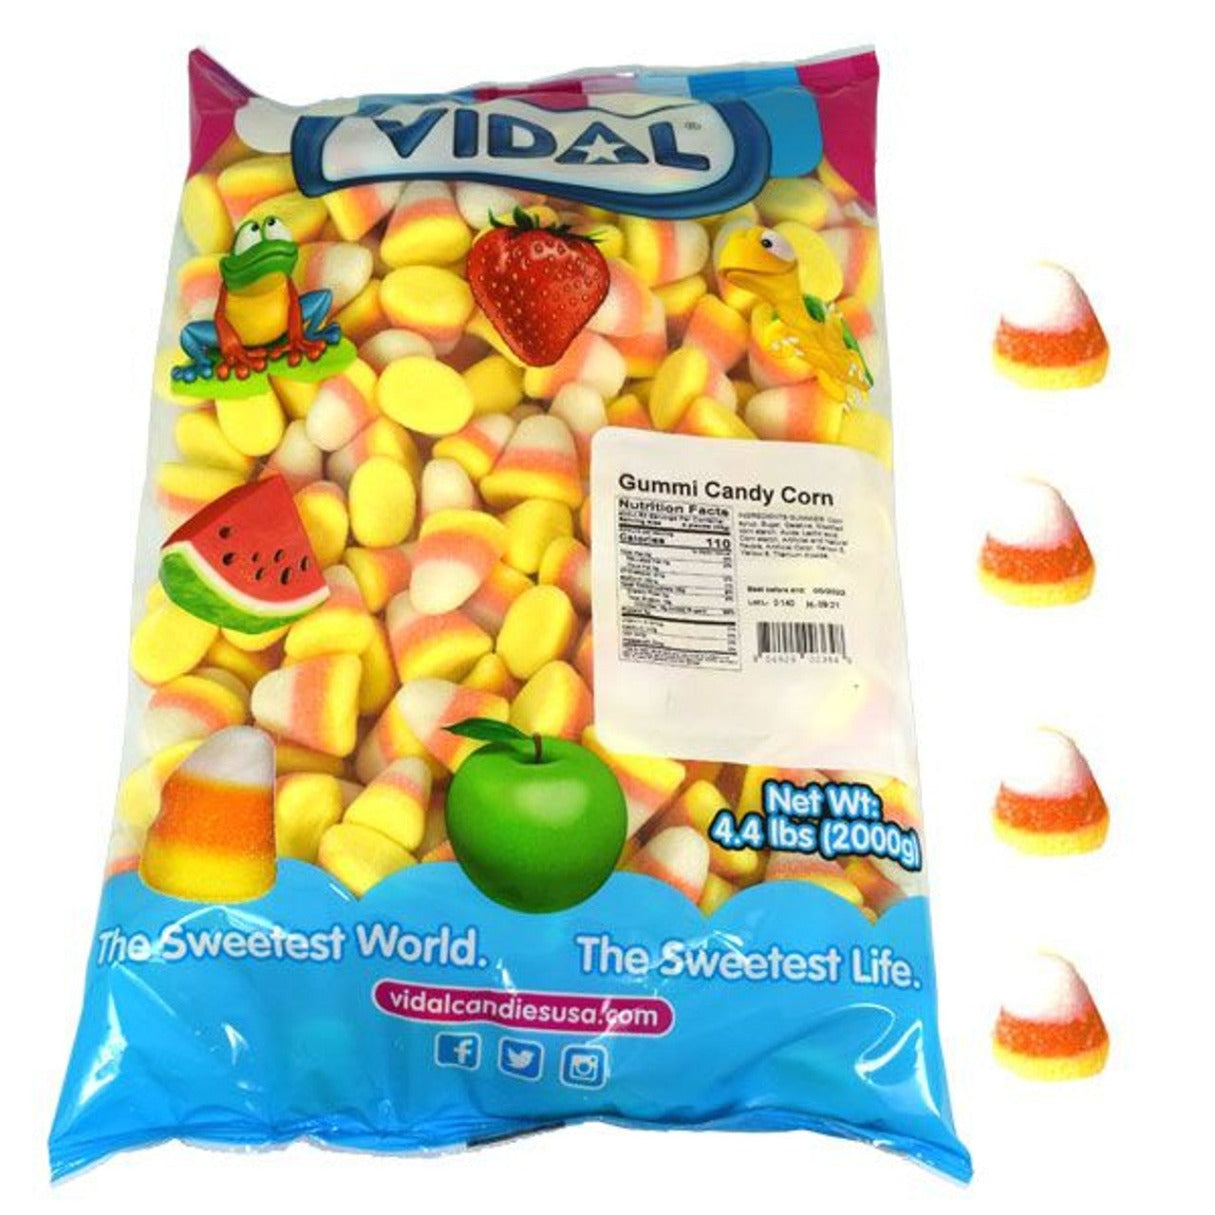 Vidal Gummi Candy Corn Bulk Bag  4.4lb - 1ct